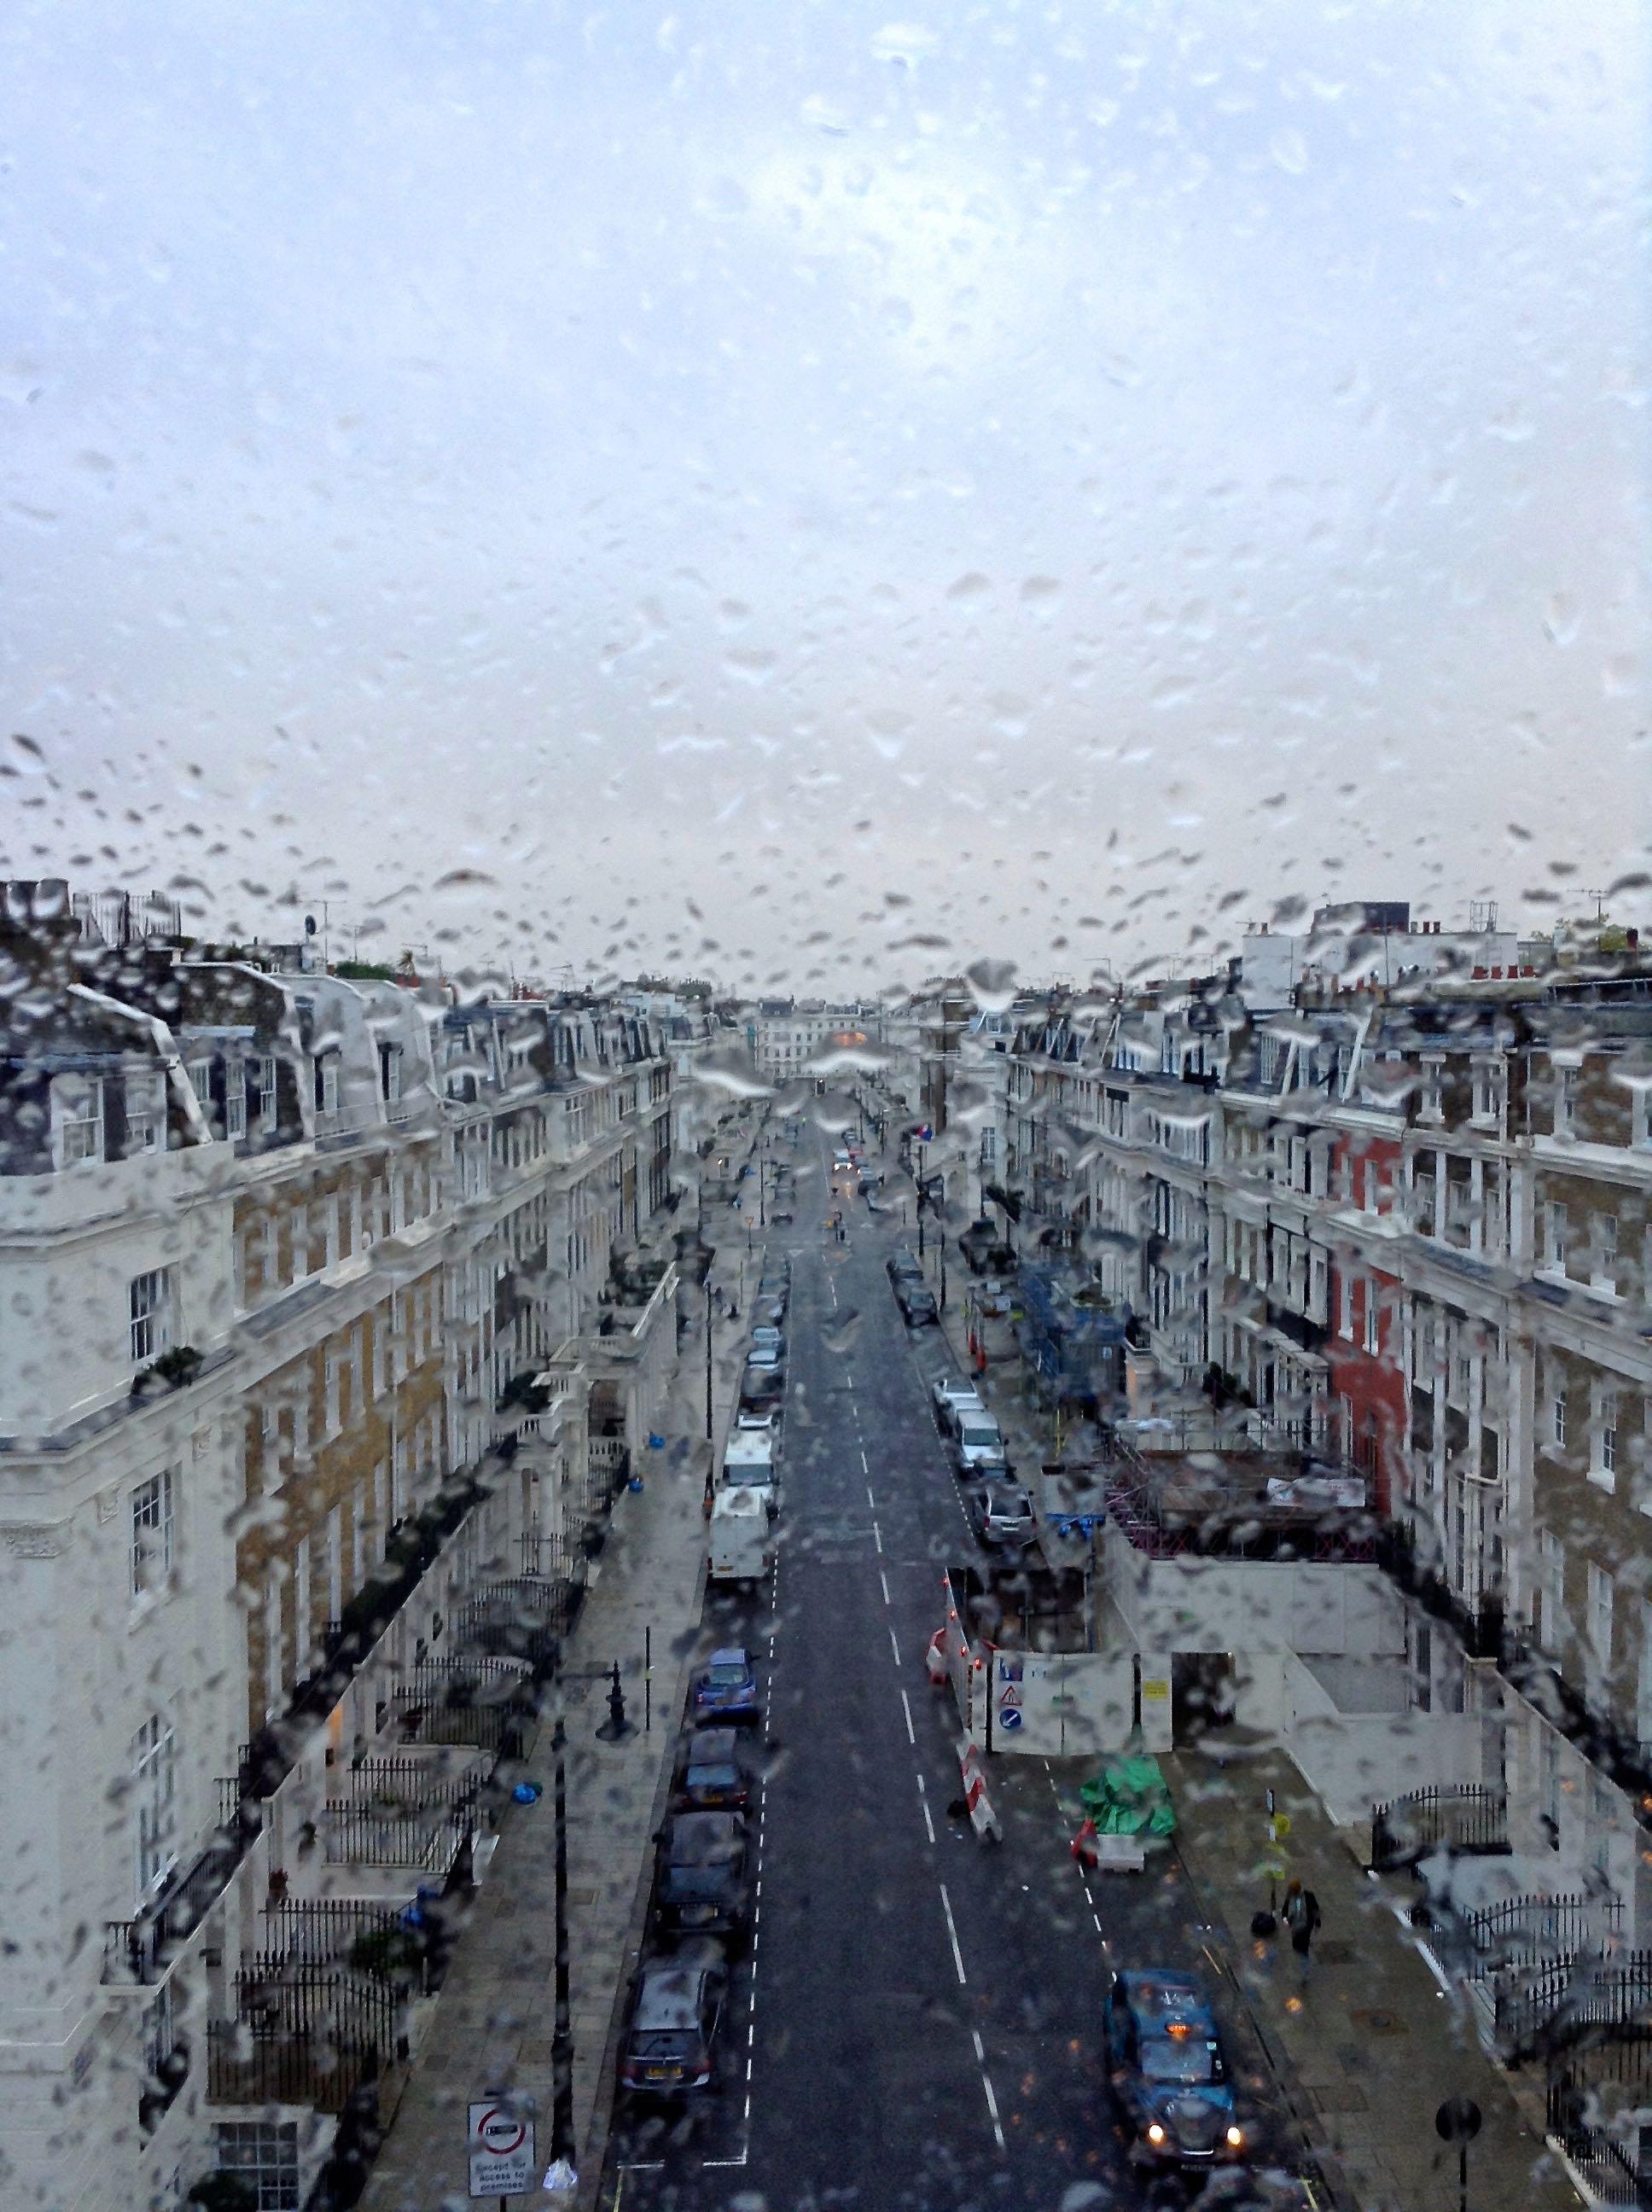 Philip Shalam Landscape Photograph - HOMAGE TO LONDON RAIN - CONTEMPORARY PHOTO - COLOUR PHOTO - WINDOW - CITY - VIEW